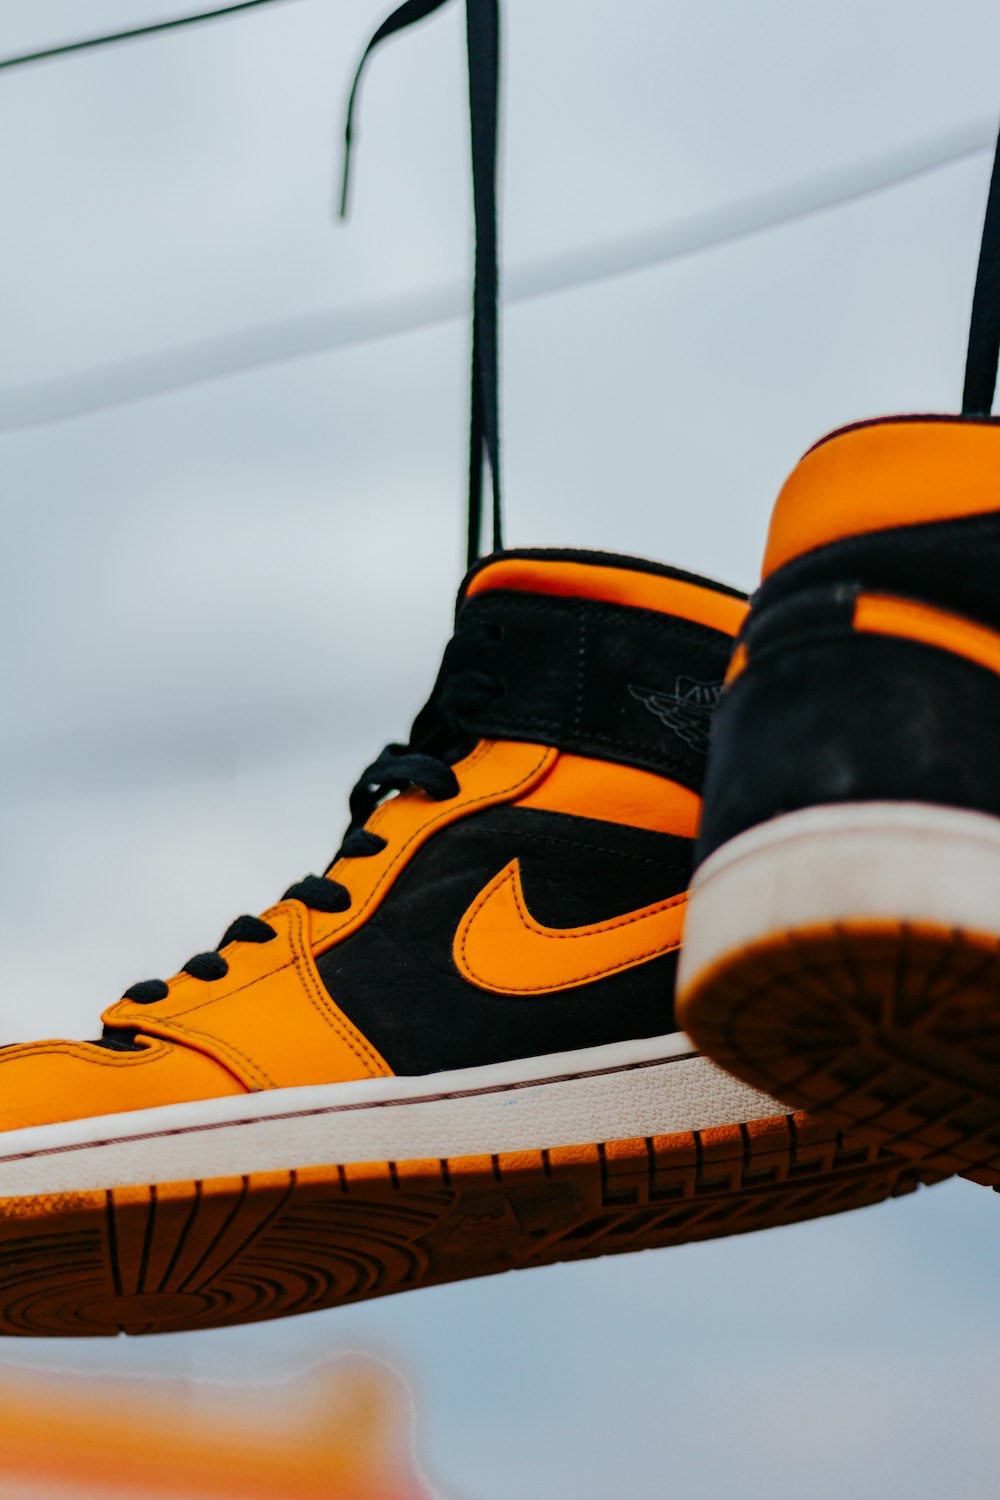 person wearing orange and black nike high top sneakers photo – Free  Footwear Image on Unsplash